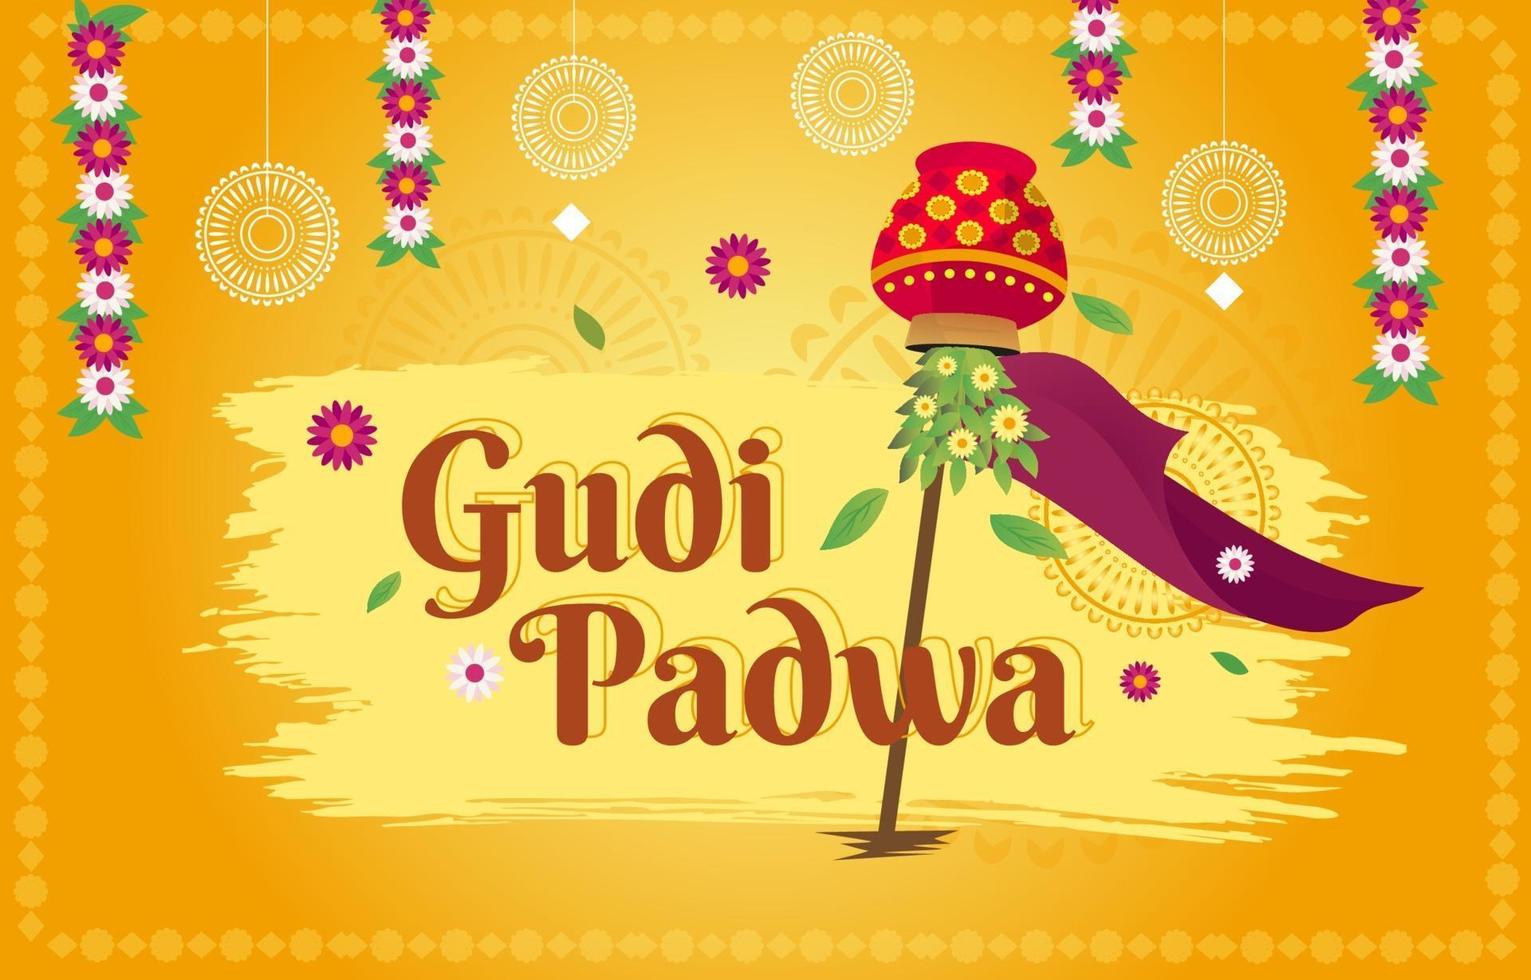 Gudi Padwa Festival Background vector